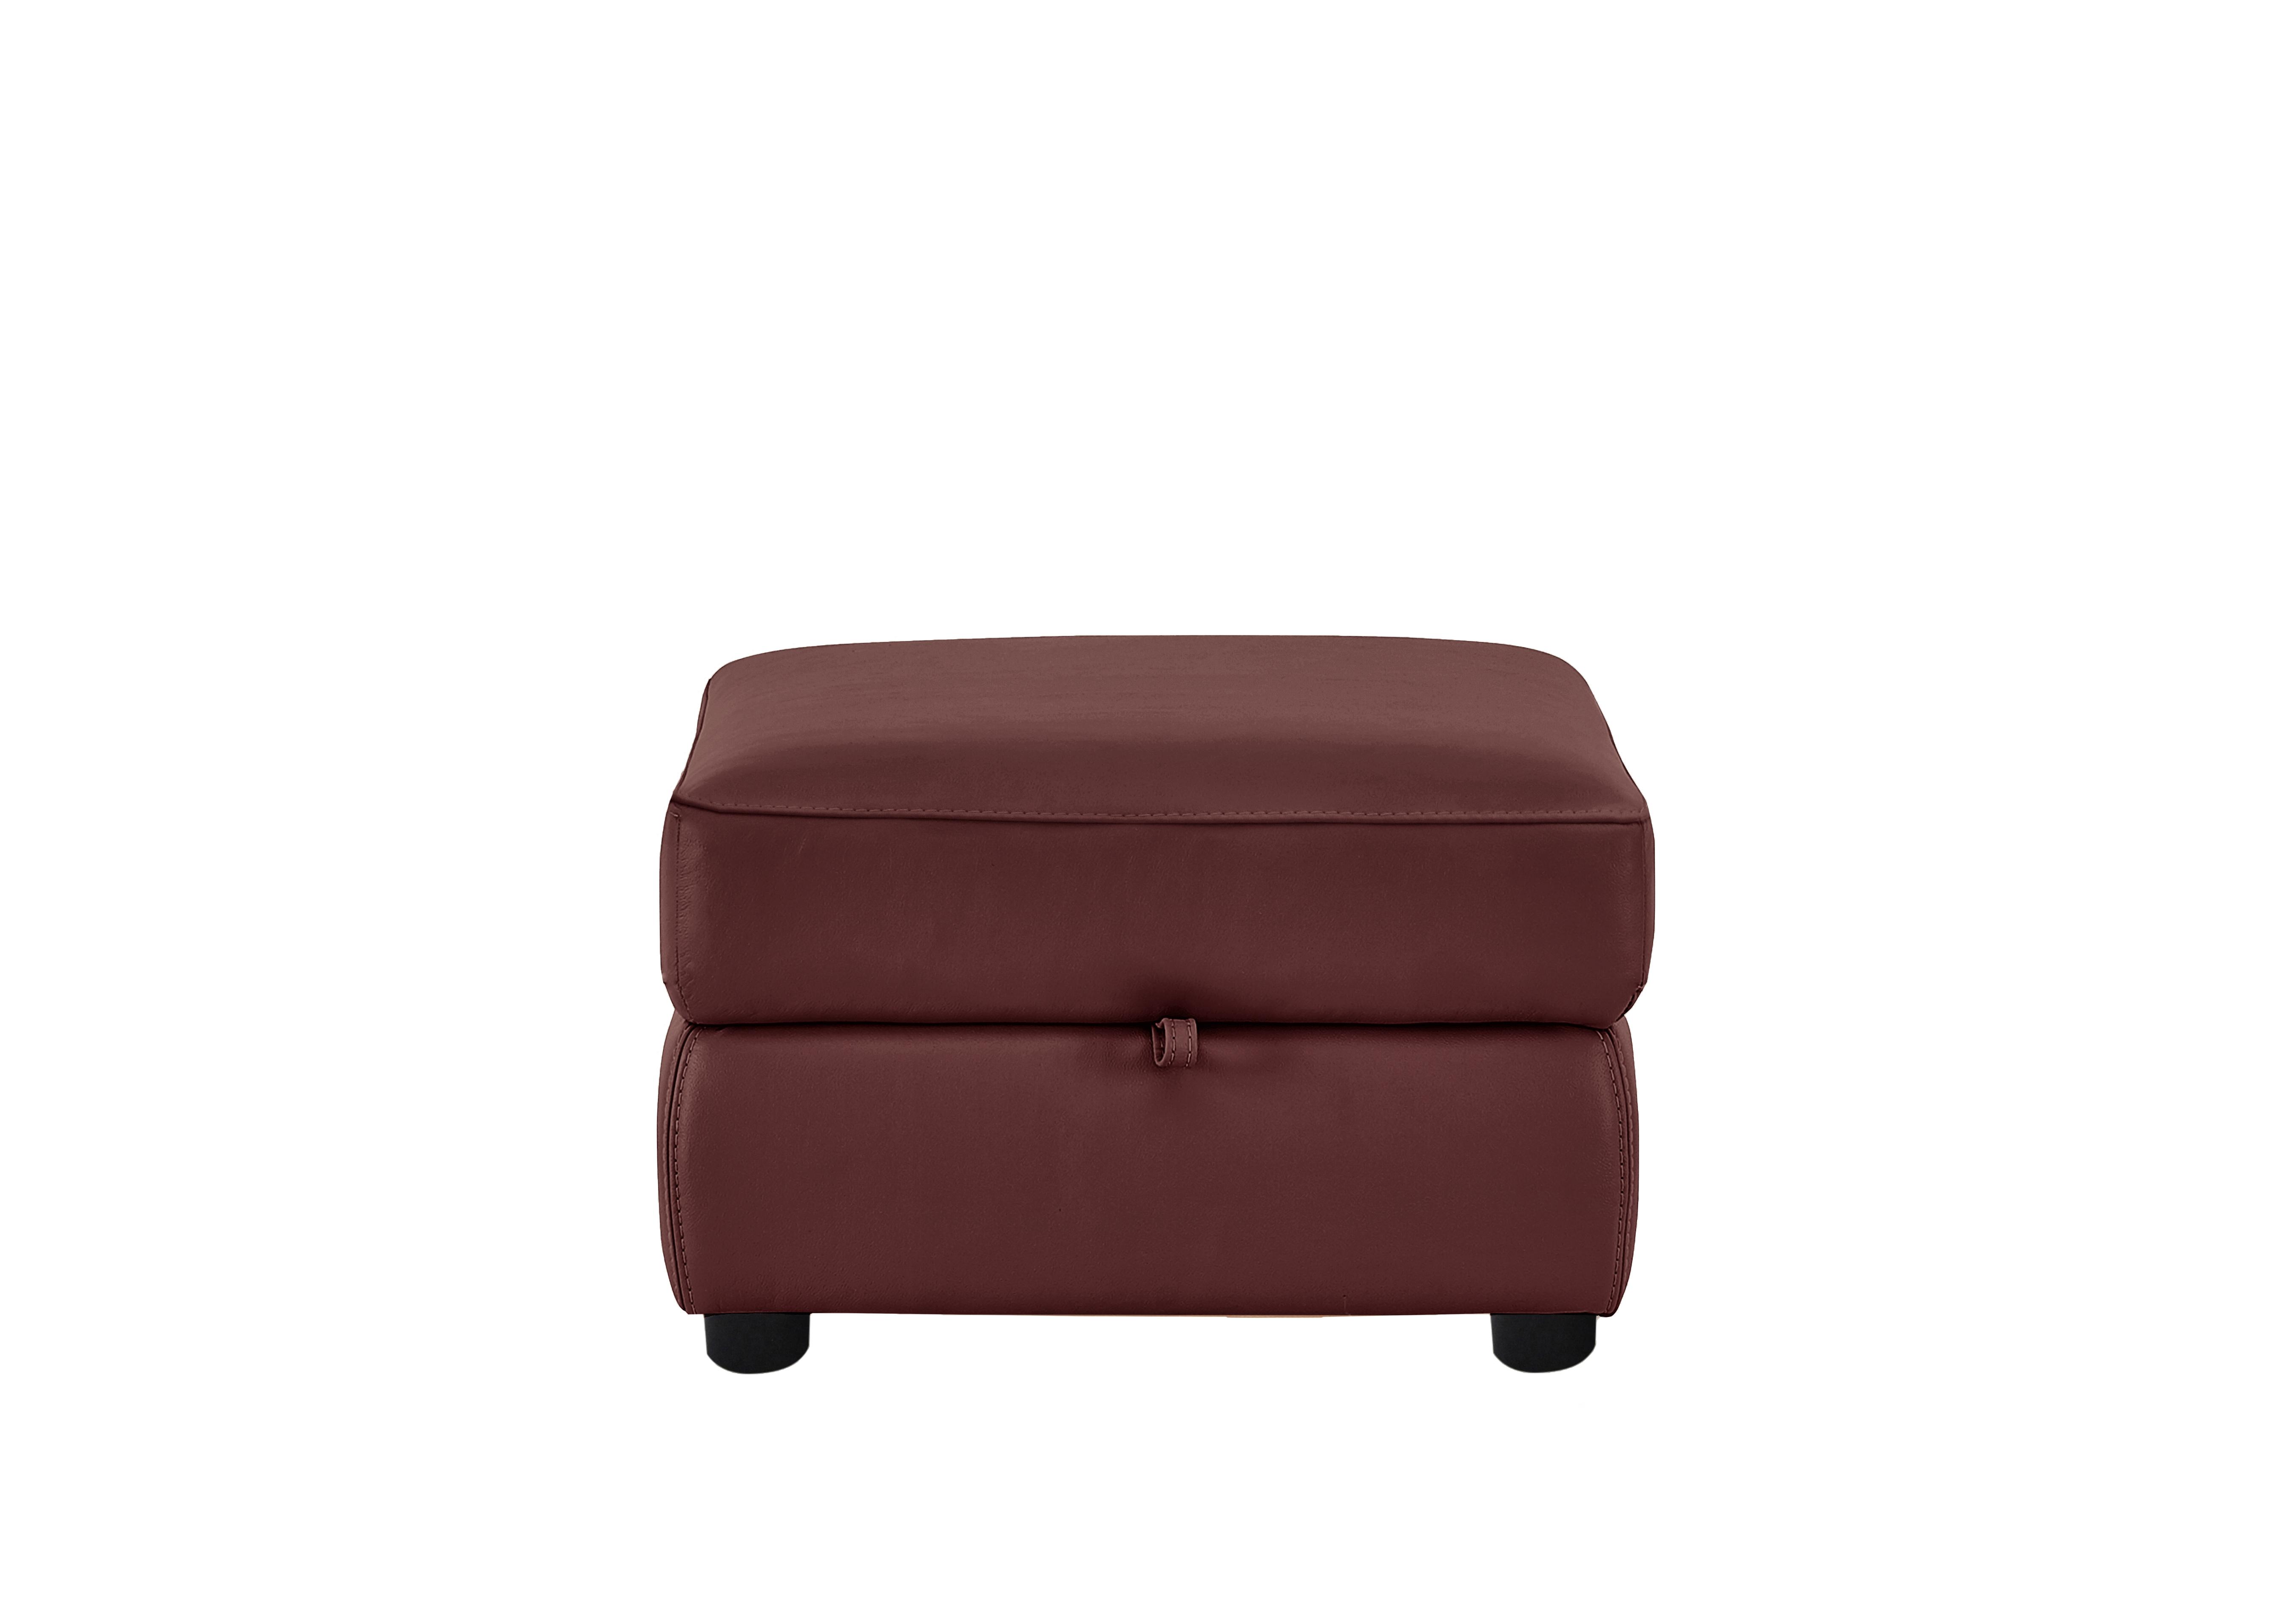 Snug Leather Storage Footstool in Bv-035c Deep Red on Furniture Village